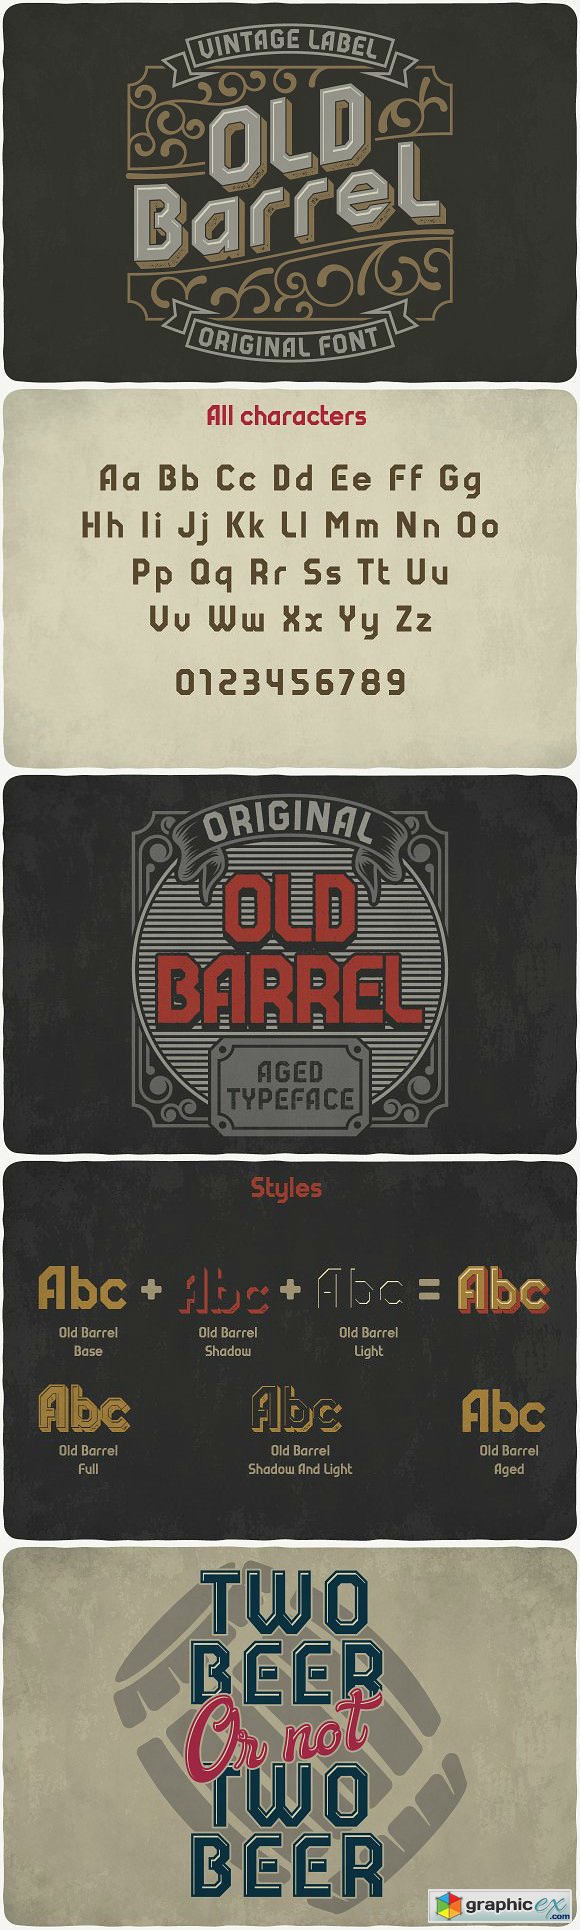 Old Barrel typeface